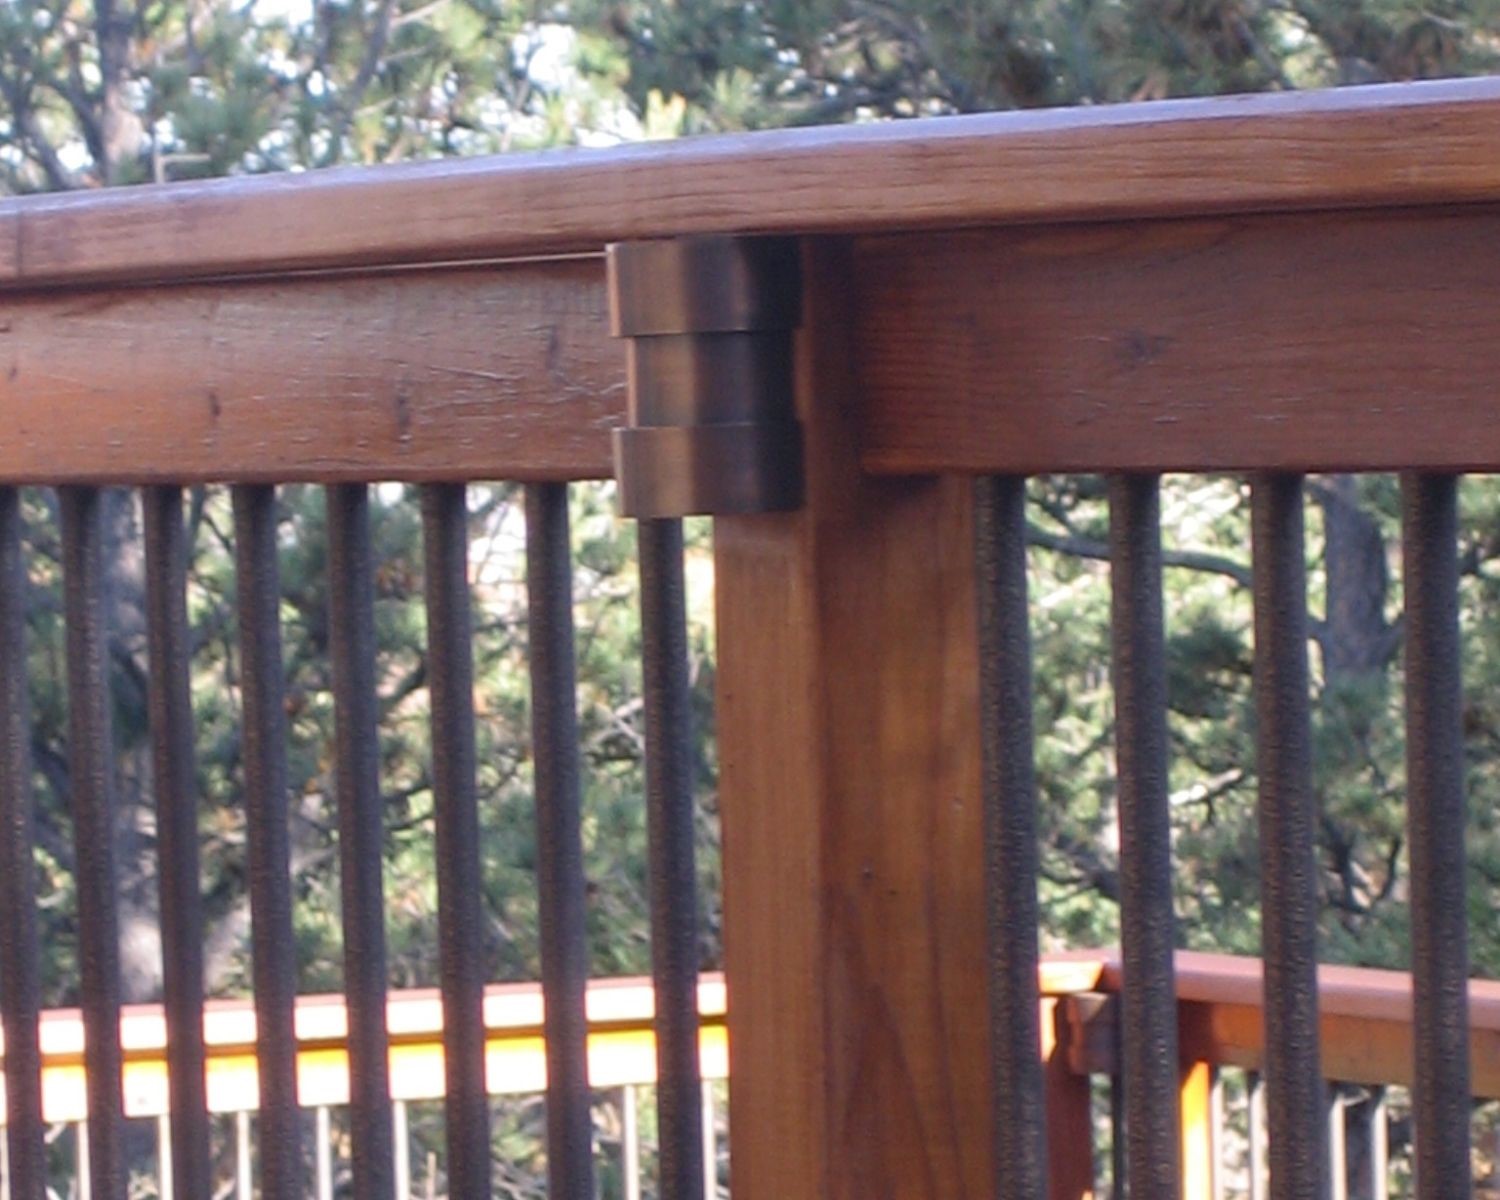 Railing post light installed under the railing drink cap.